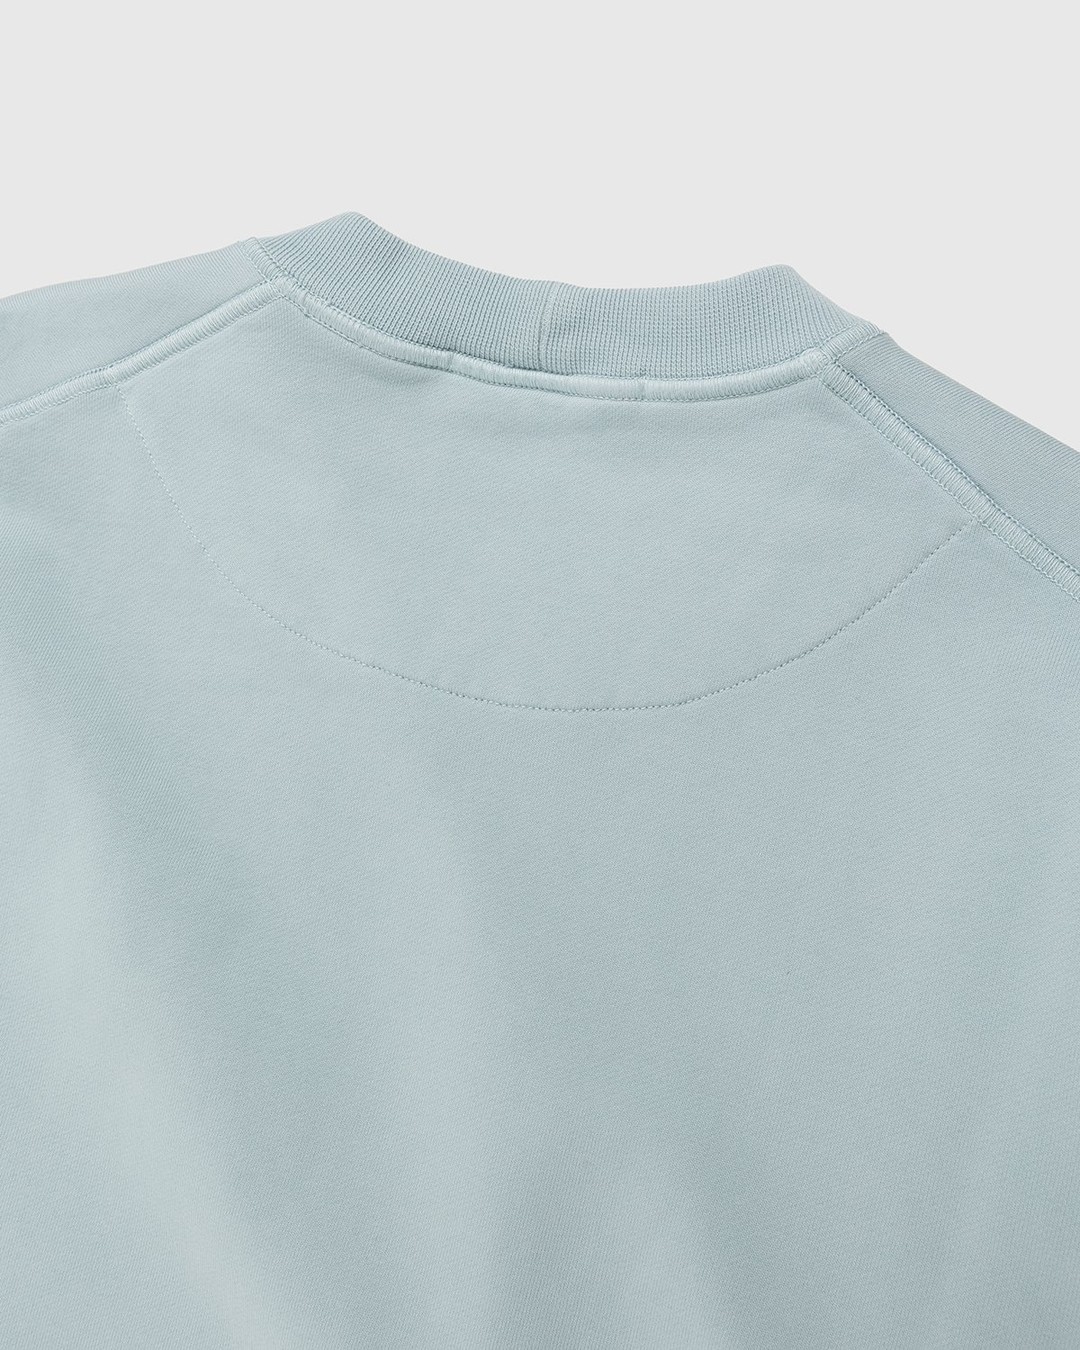 Stone Island – 63051 Garment-Dyed Cotton Fleece Crewneck Aqua - Sweats - Blue - Image 4